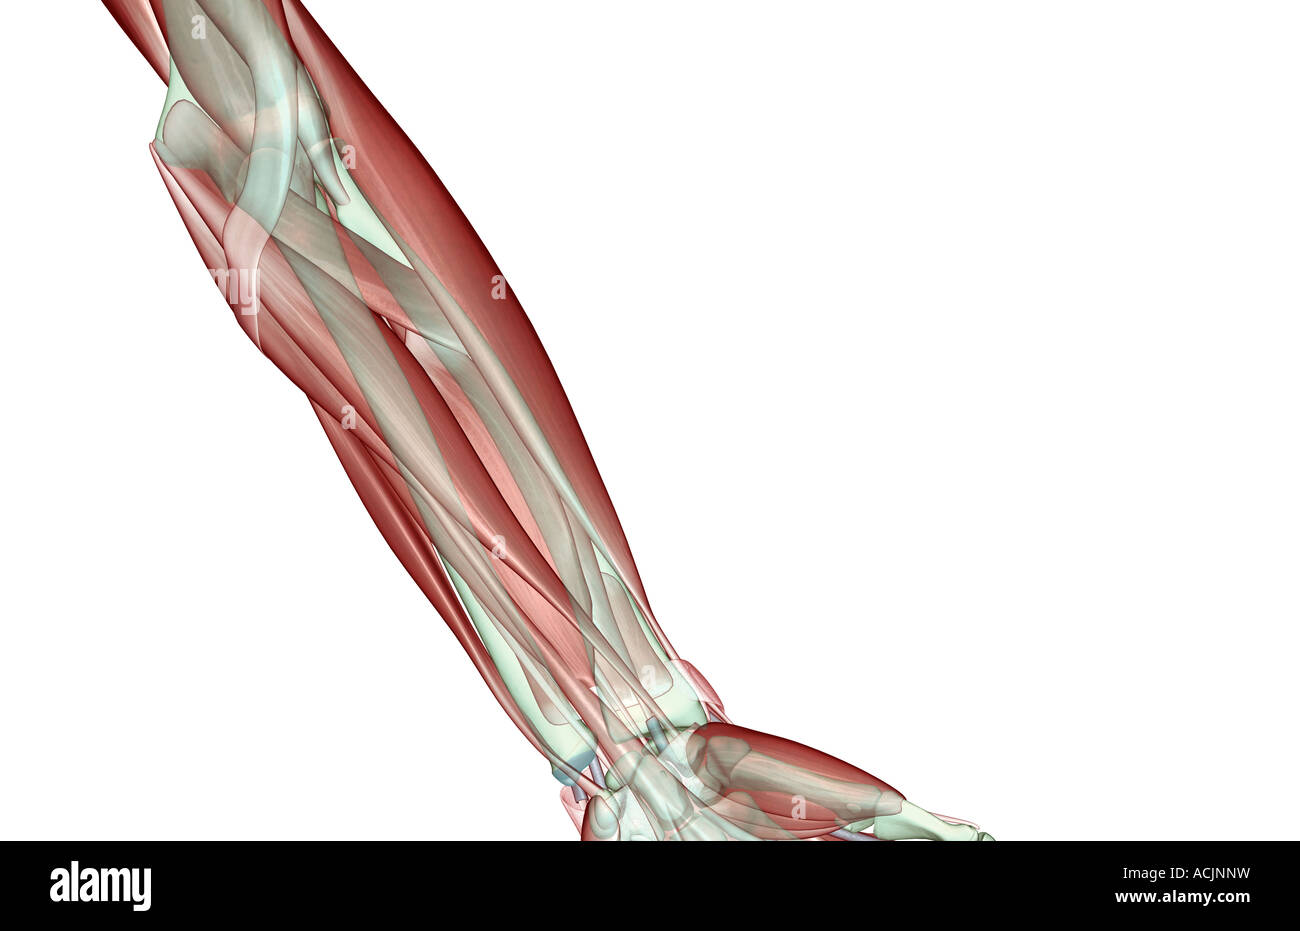 Forearm musculoskeleton Stock Photo